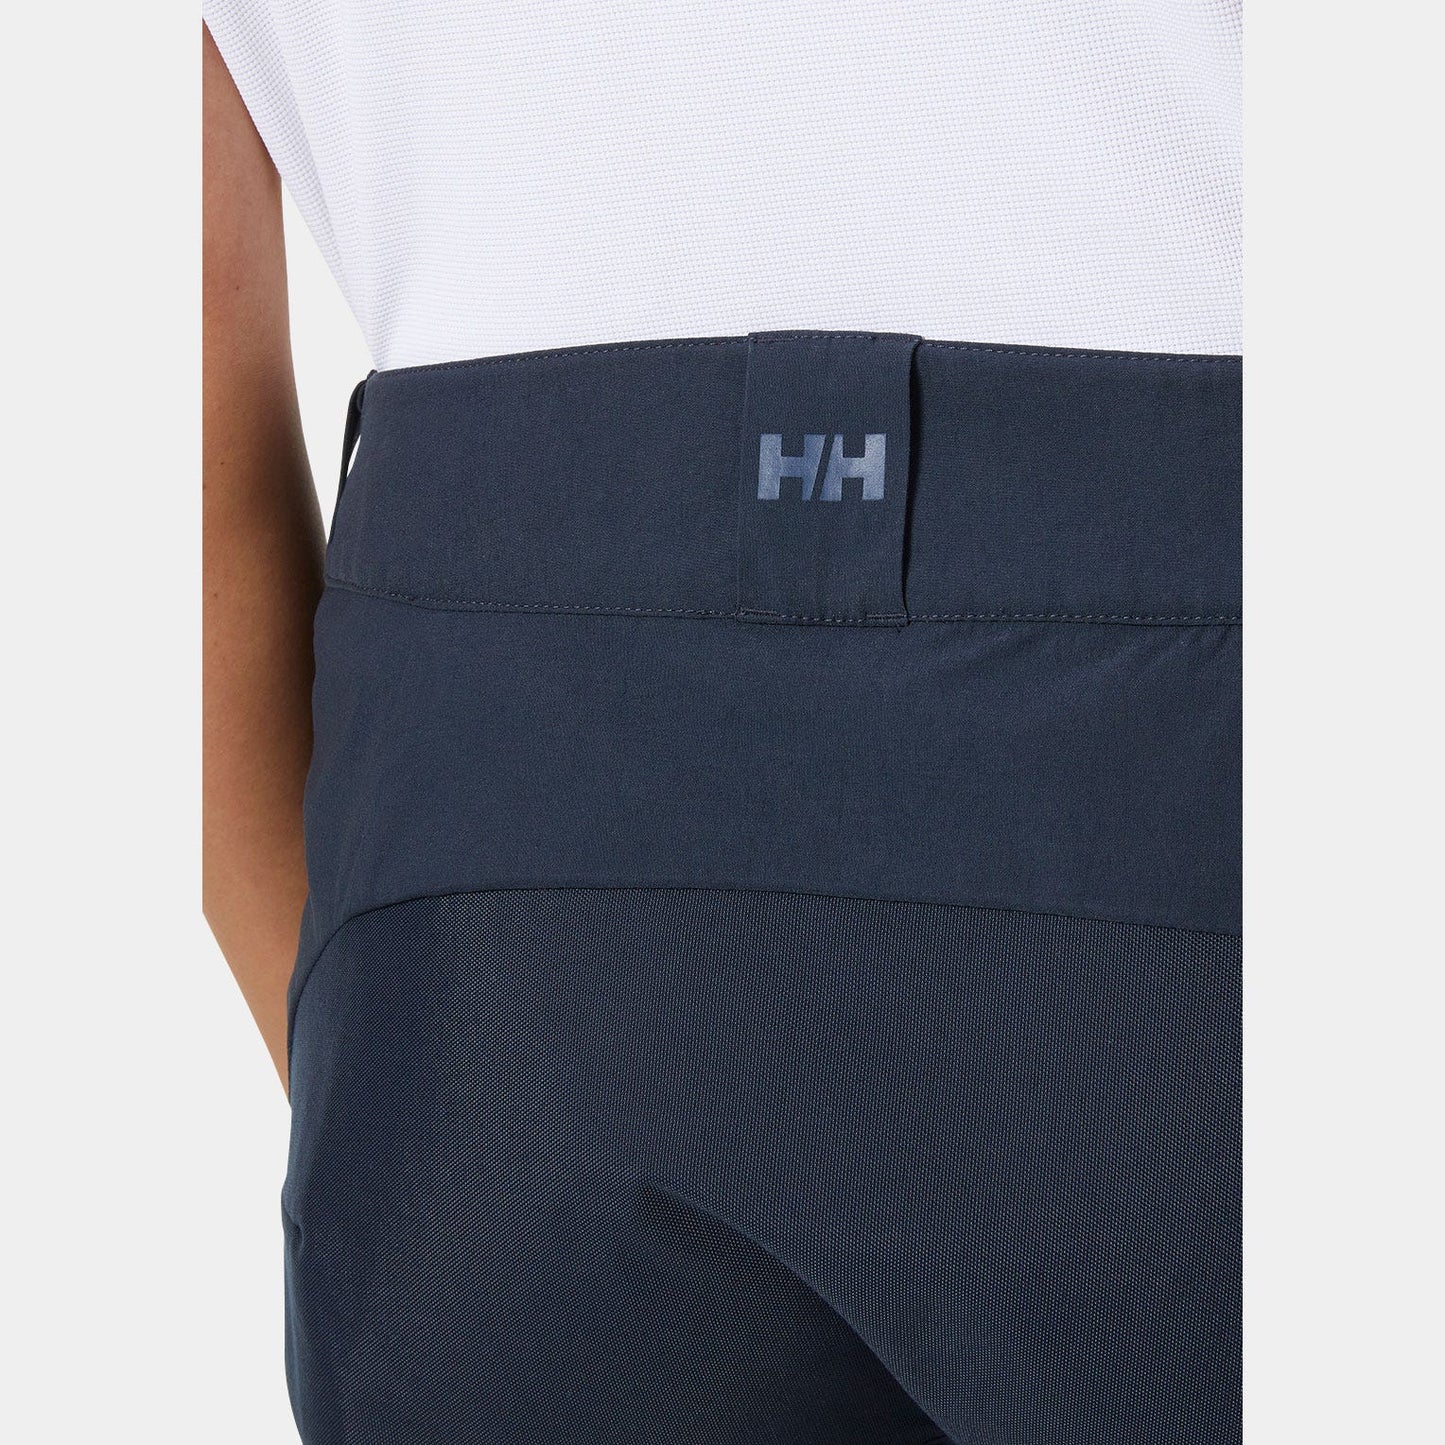 Helly Hansen Women's HP Racing Deck Shorts